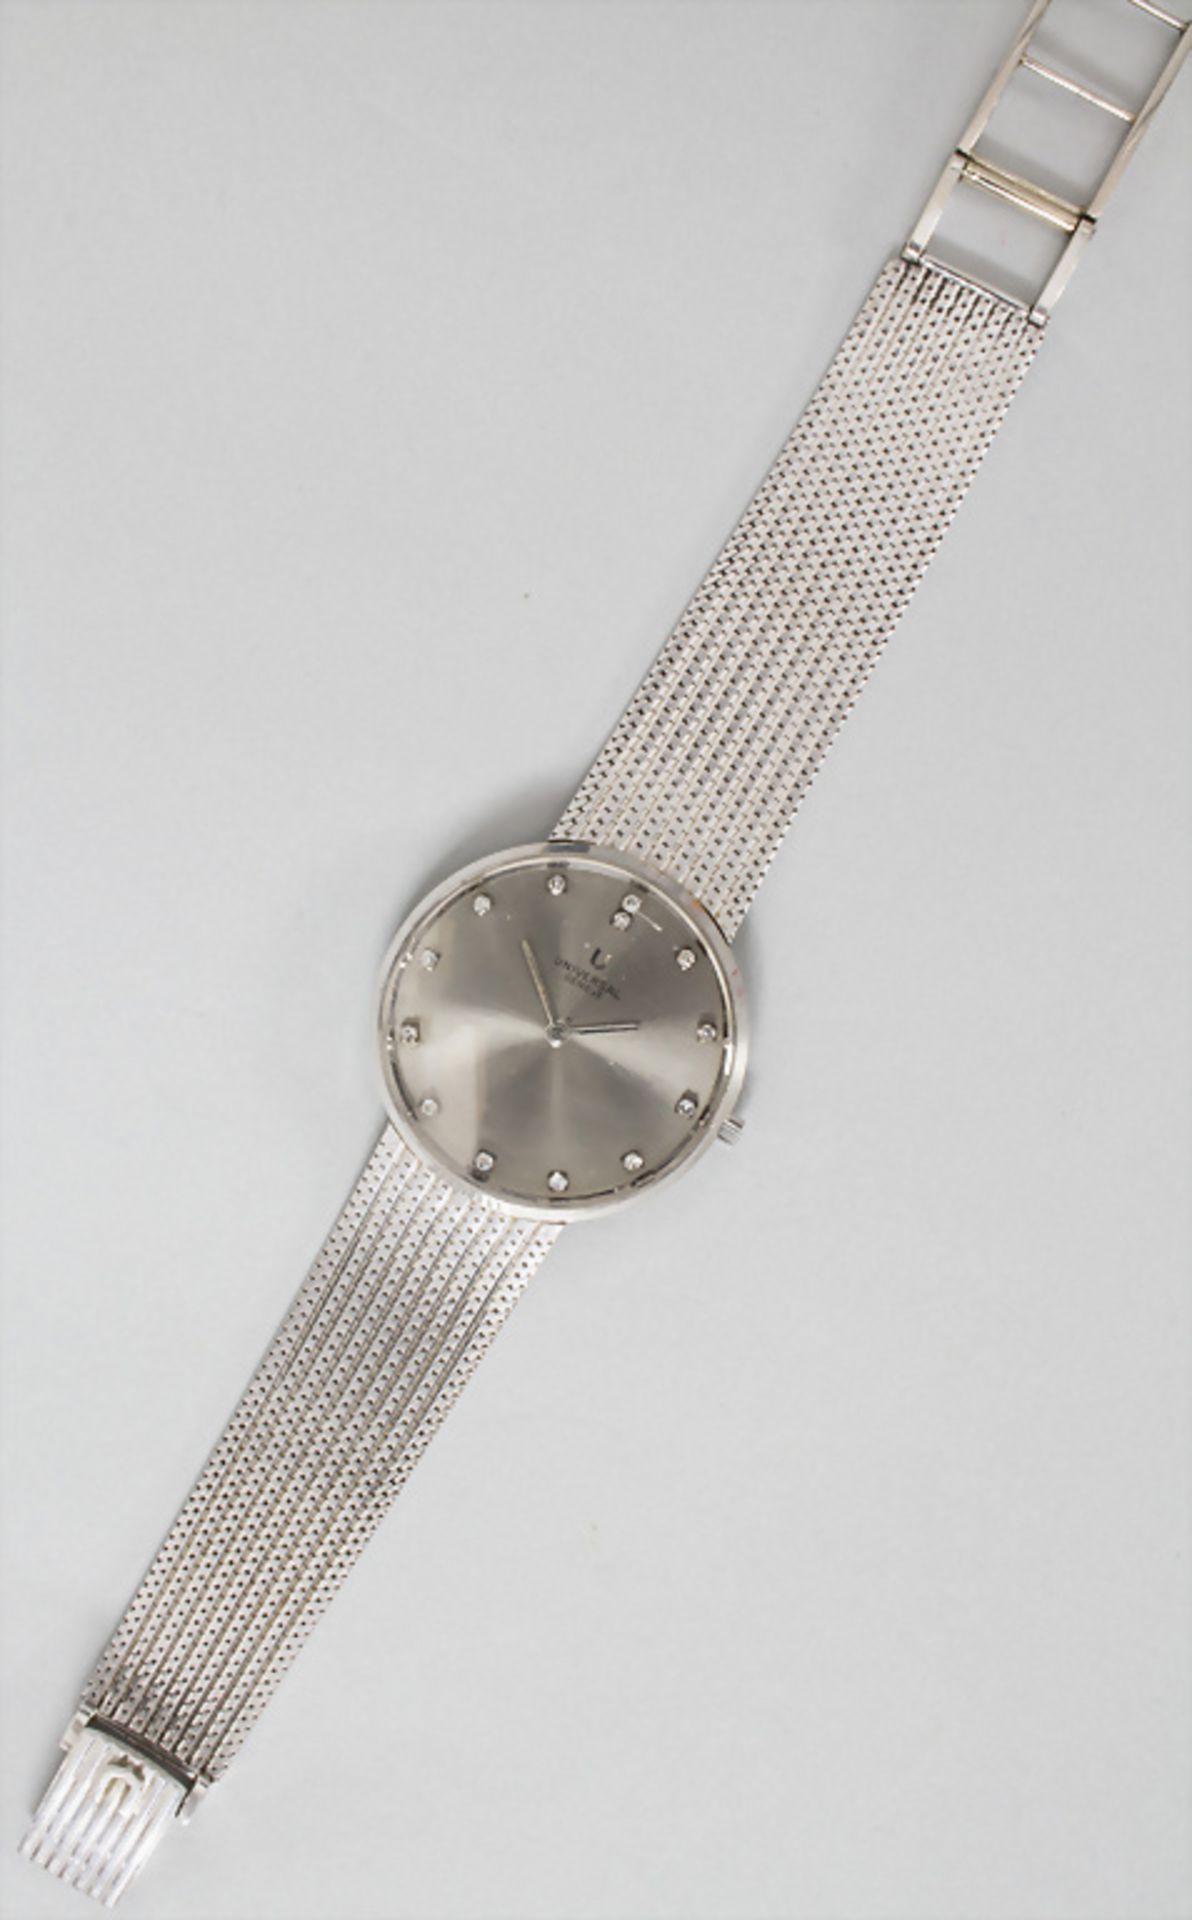 Herrenarmbanduhr / A men's wristwatch, Universal Géneve, Swiss, um 1970 - Bild 3 aus 4